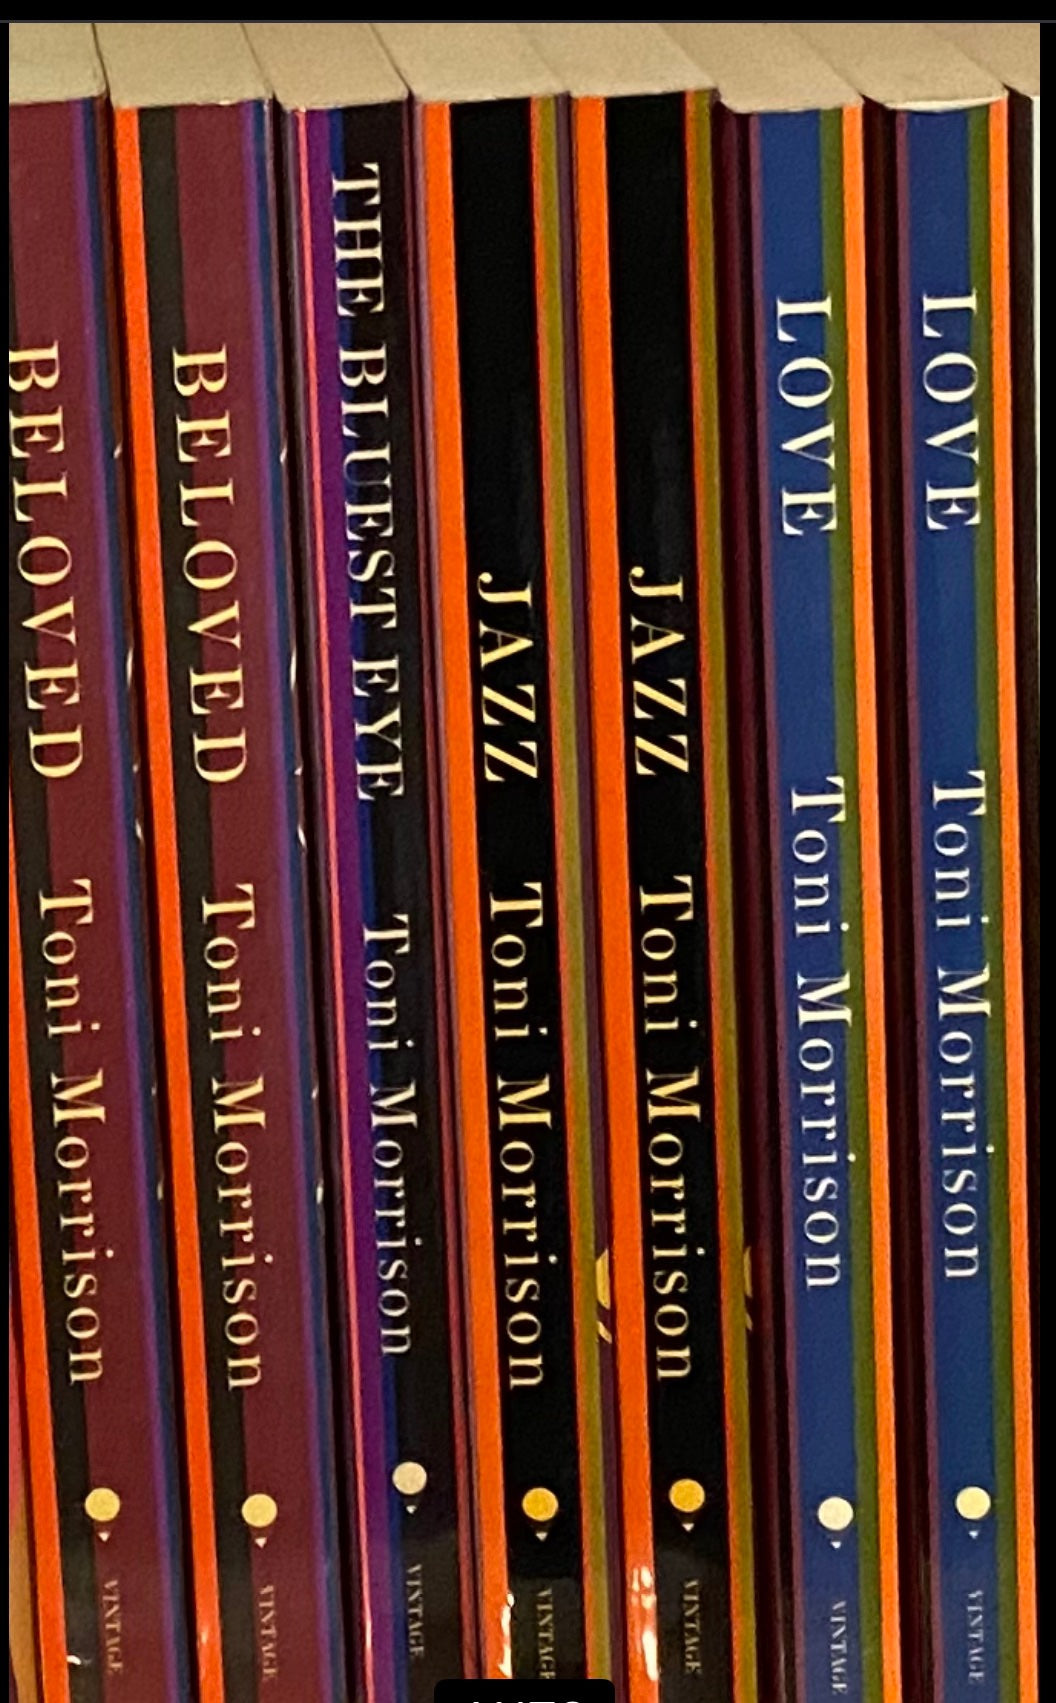 (PB) Toni Morrison  5 book collection: By Toni Morrison